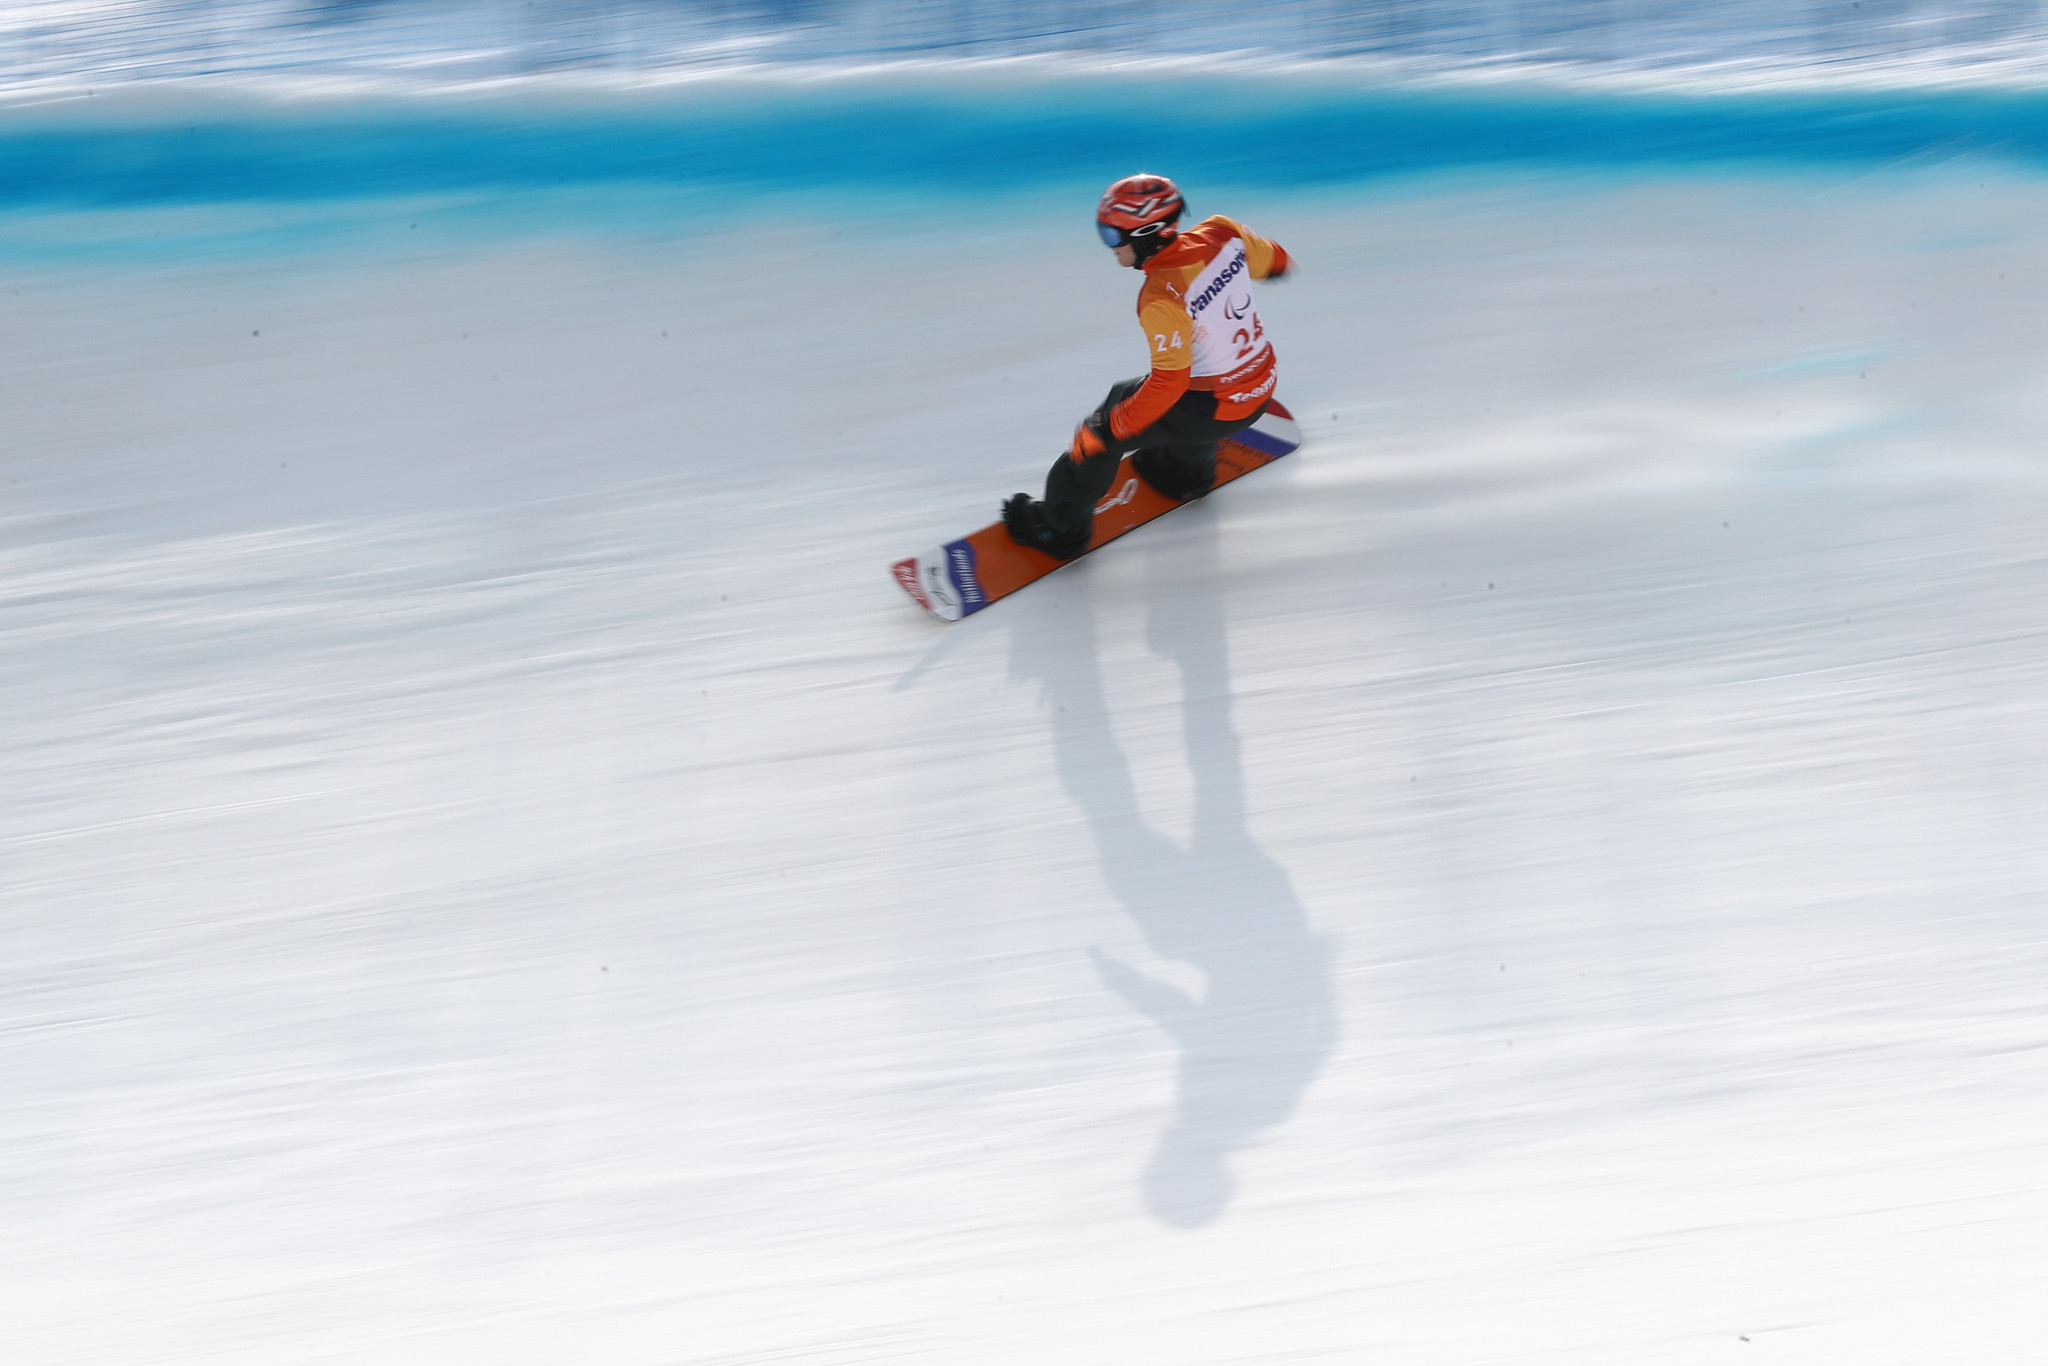 Vos among snowboard cross winners as World Para Snowboard World Cup Finals ends